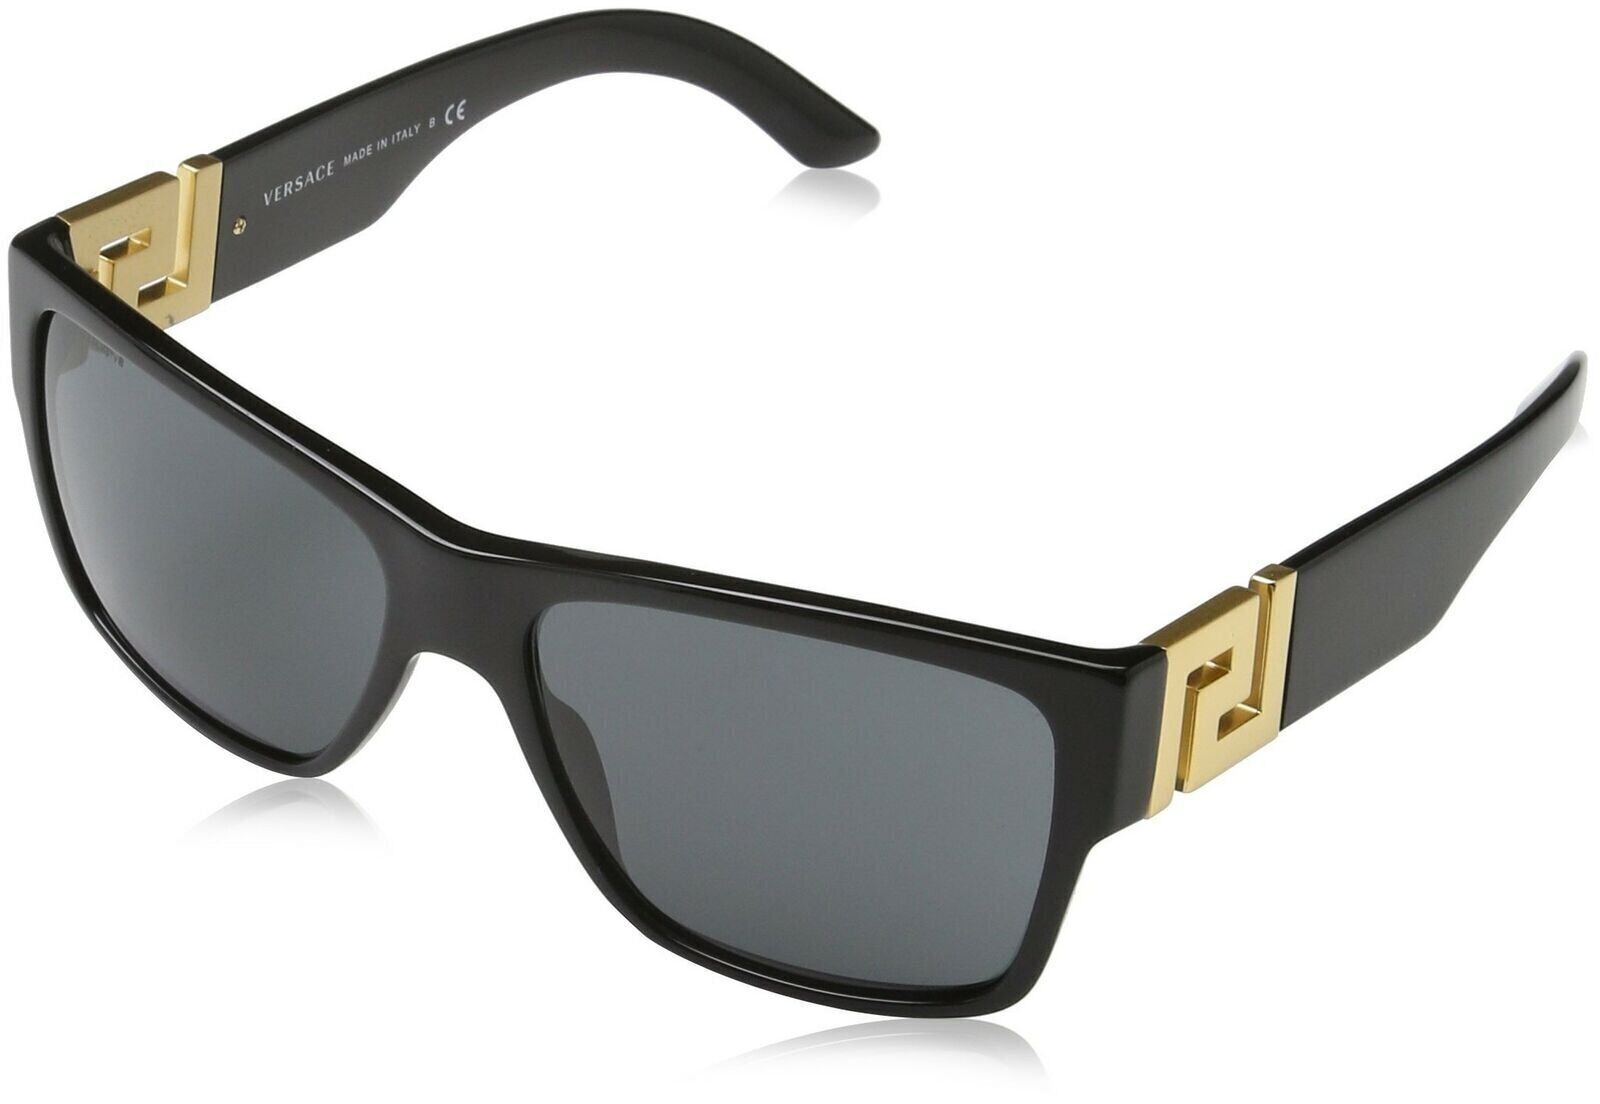 Versace Men's VE4296 Sunglasses Black/Gray 59mm